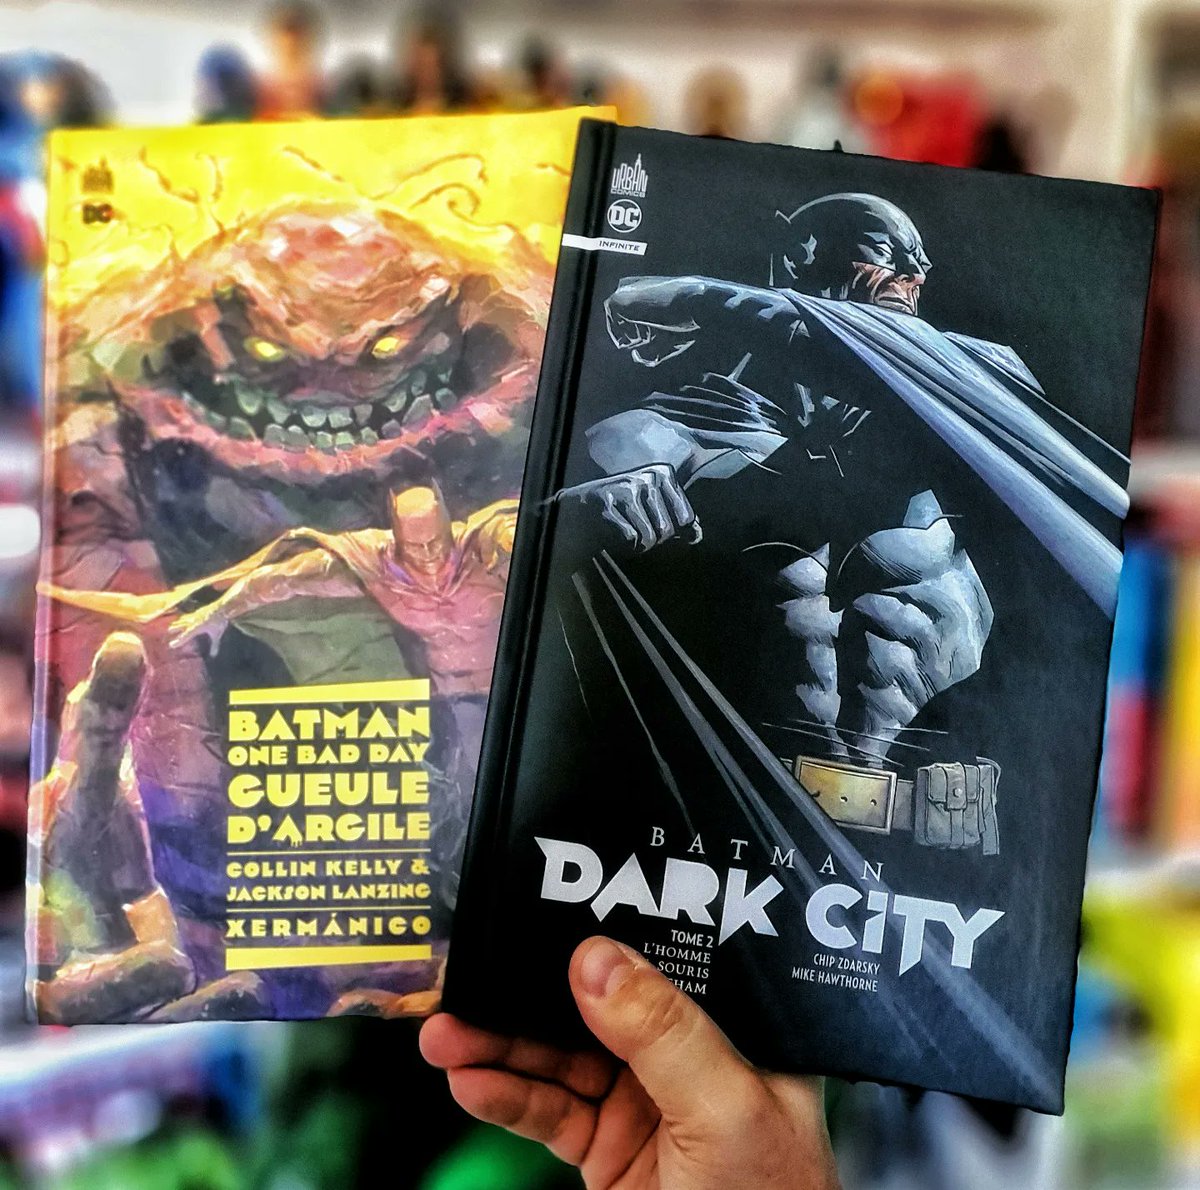 Arrivage #comics @urbancomics du weekend : 
-#Batman One Bad Day : Gueule d'argile  @thecollinkelly & @foundinthewild & @xermanico 
- #Batman #DarkCity Tome 2 : L'homme chauve-souris de #Gotham 
#chipzdarsky & @mikehawthorneart & @jorge_jimenez_art